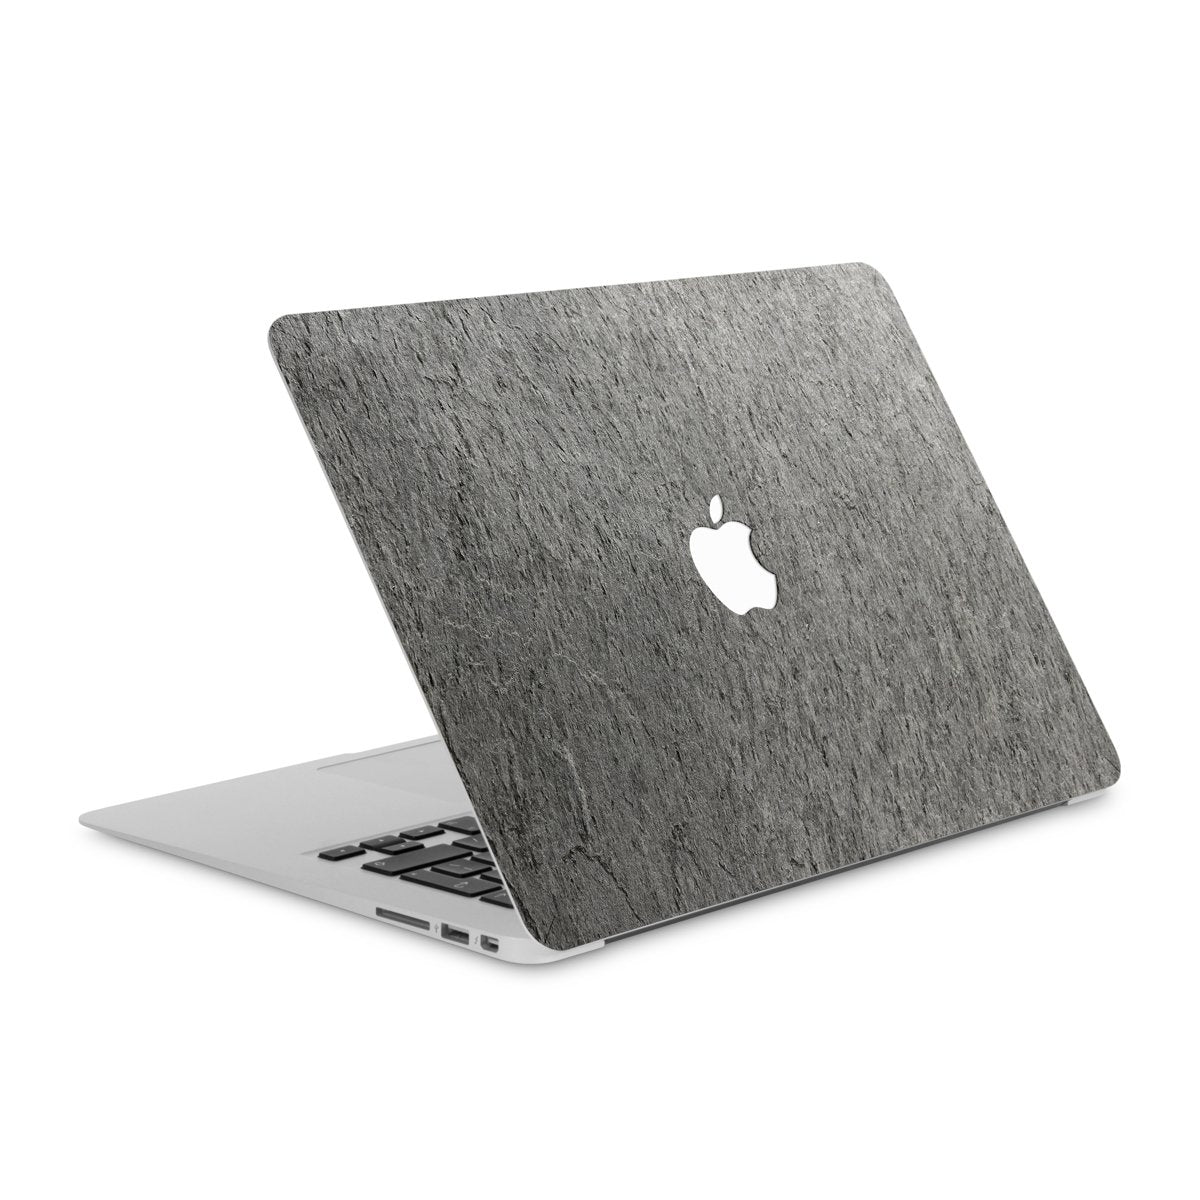 Moonlight MacBook Air 11 Stone Skin - Stone Skins - Cover-Up